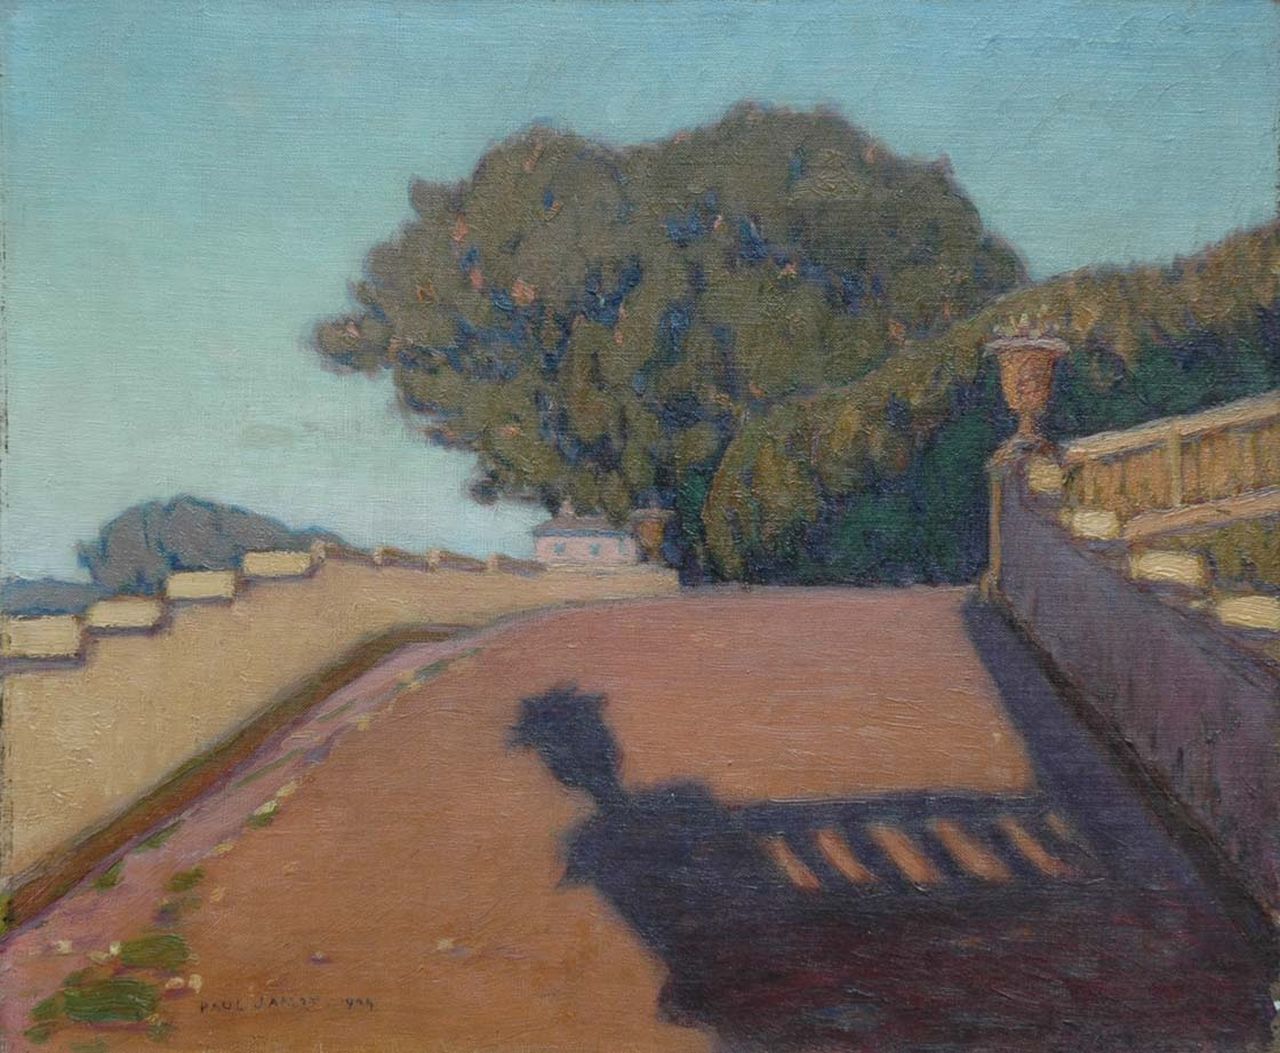 Paul Jamot | Villa Torlonia, Frascati, Öl auf Leinwand, 38,5 x 46,0 cm, signed l.l. und dated 1909